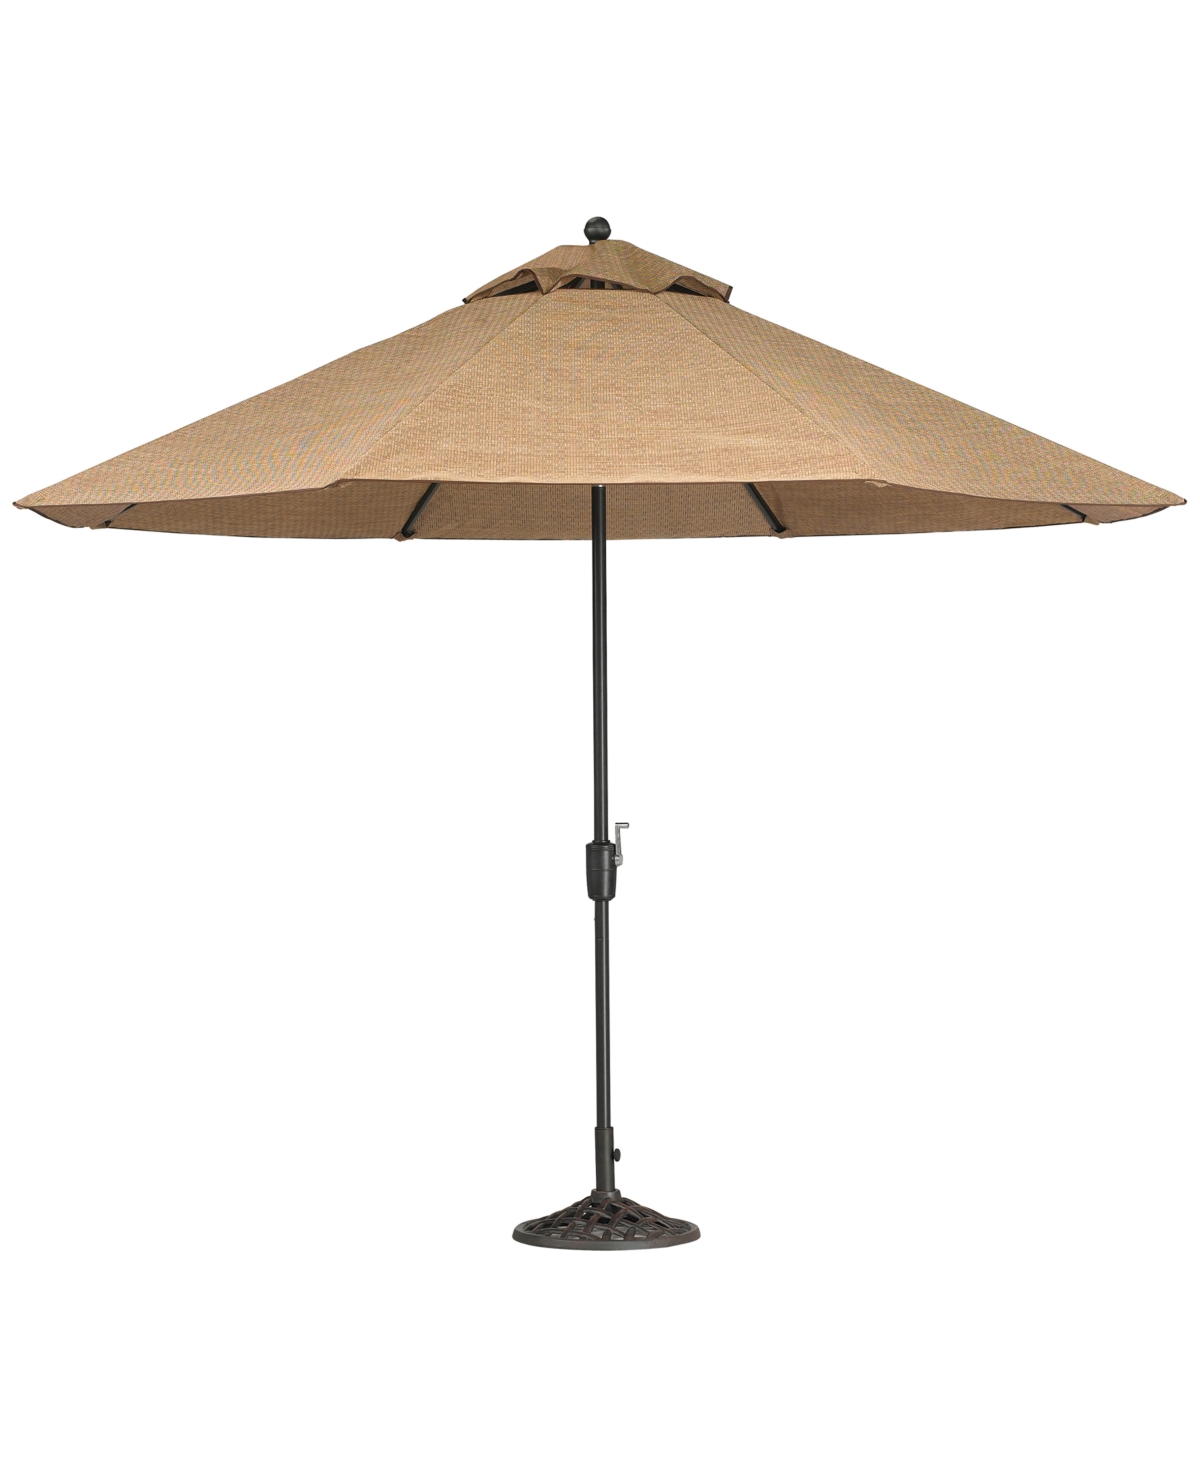 Beachmont Ii Outdoor 11 Umbrella with Base, Created for Macys